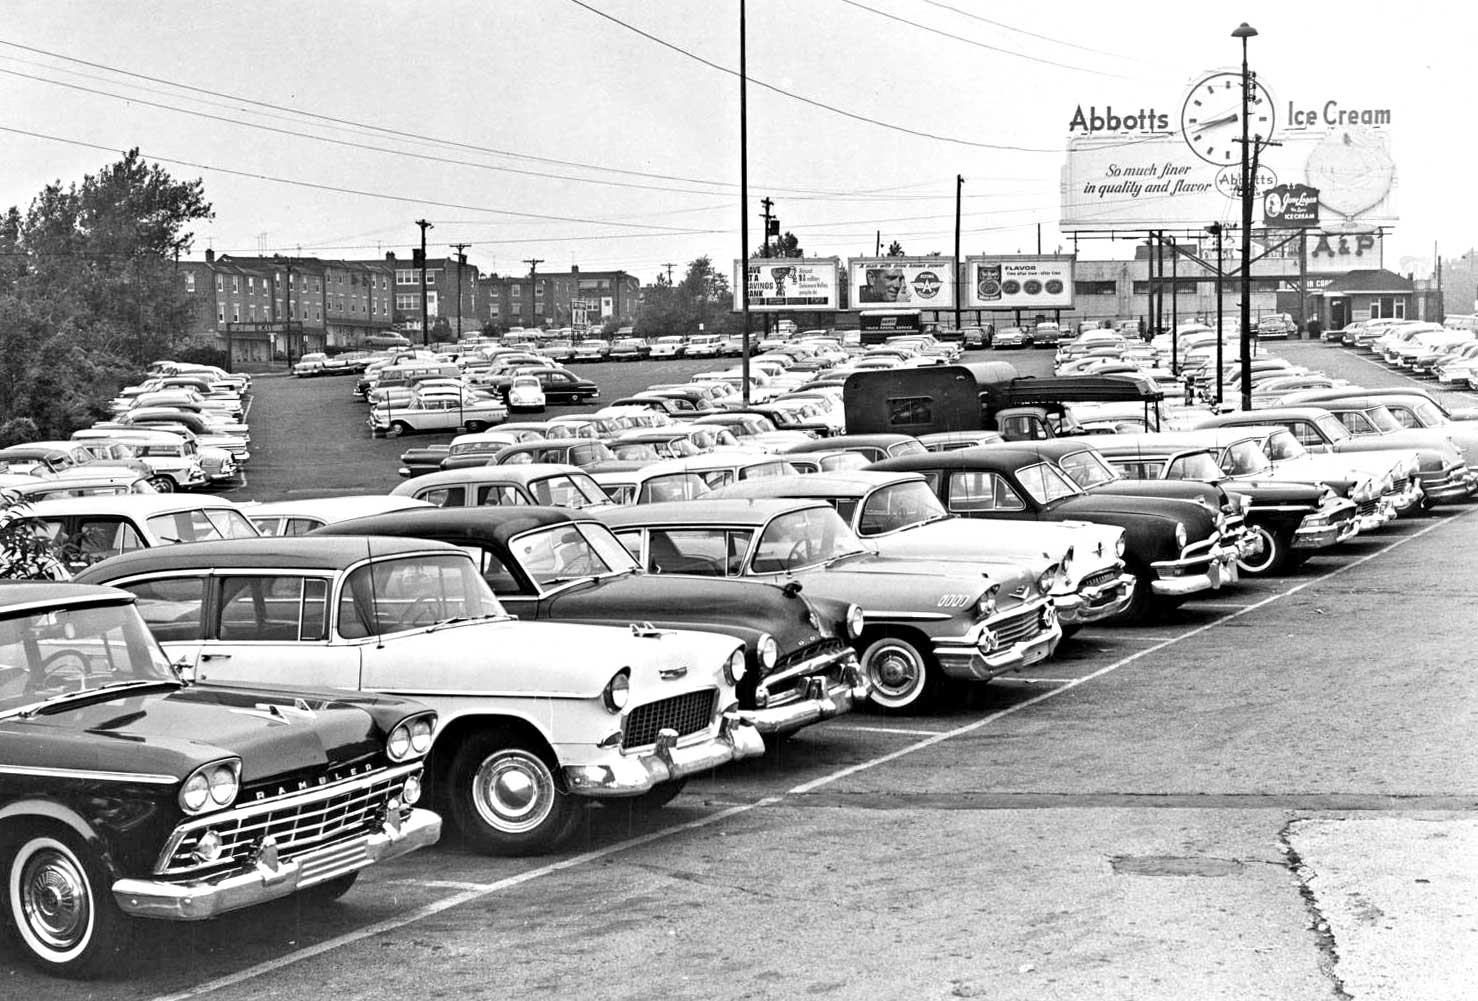 AP Super market parking lot circa 1960 1950s and 1960s automobiles